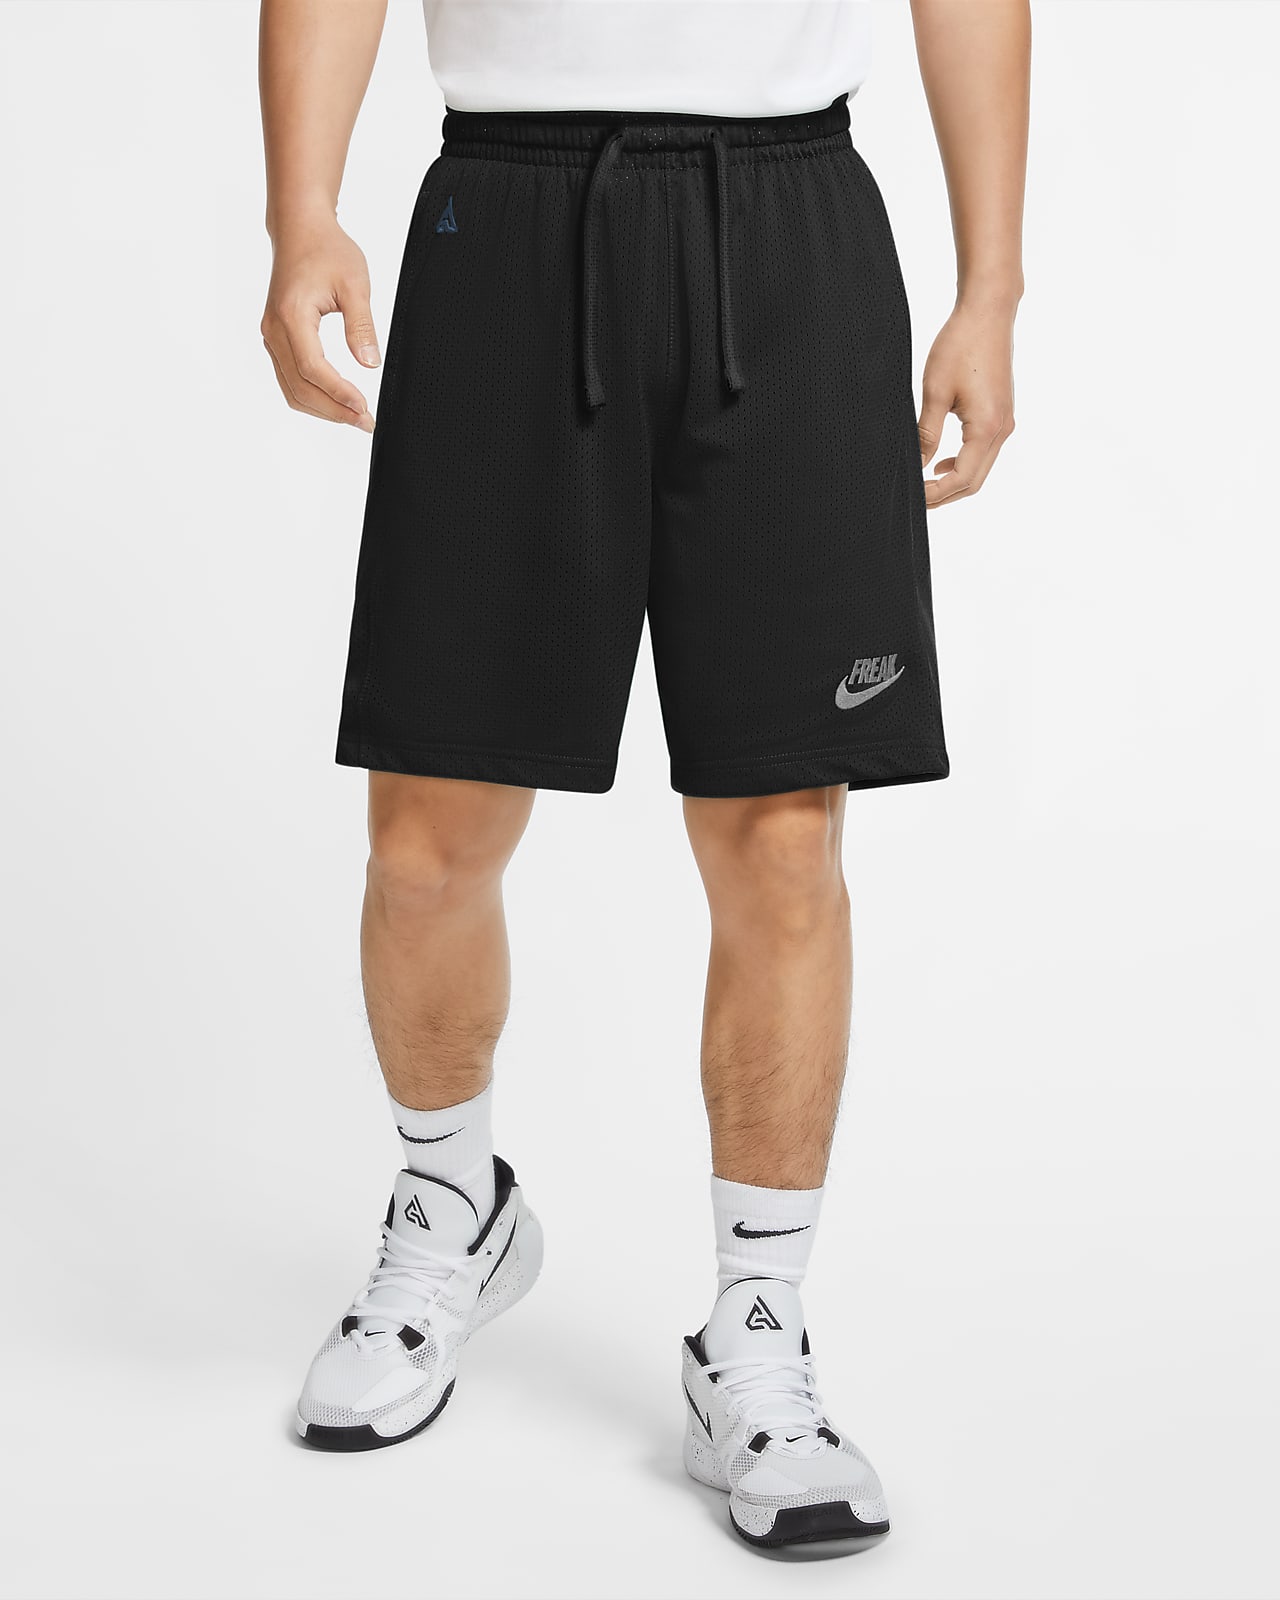 nike shorts basketball men's